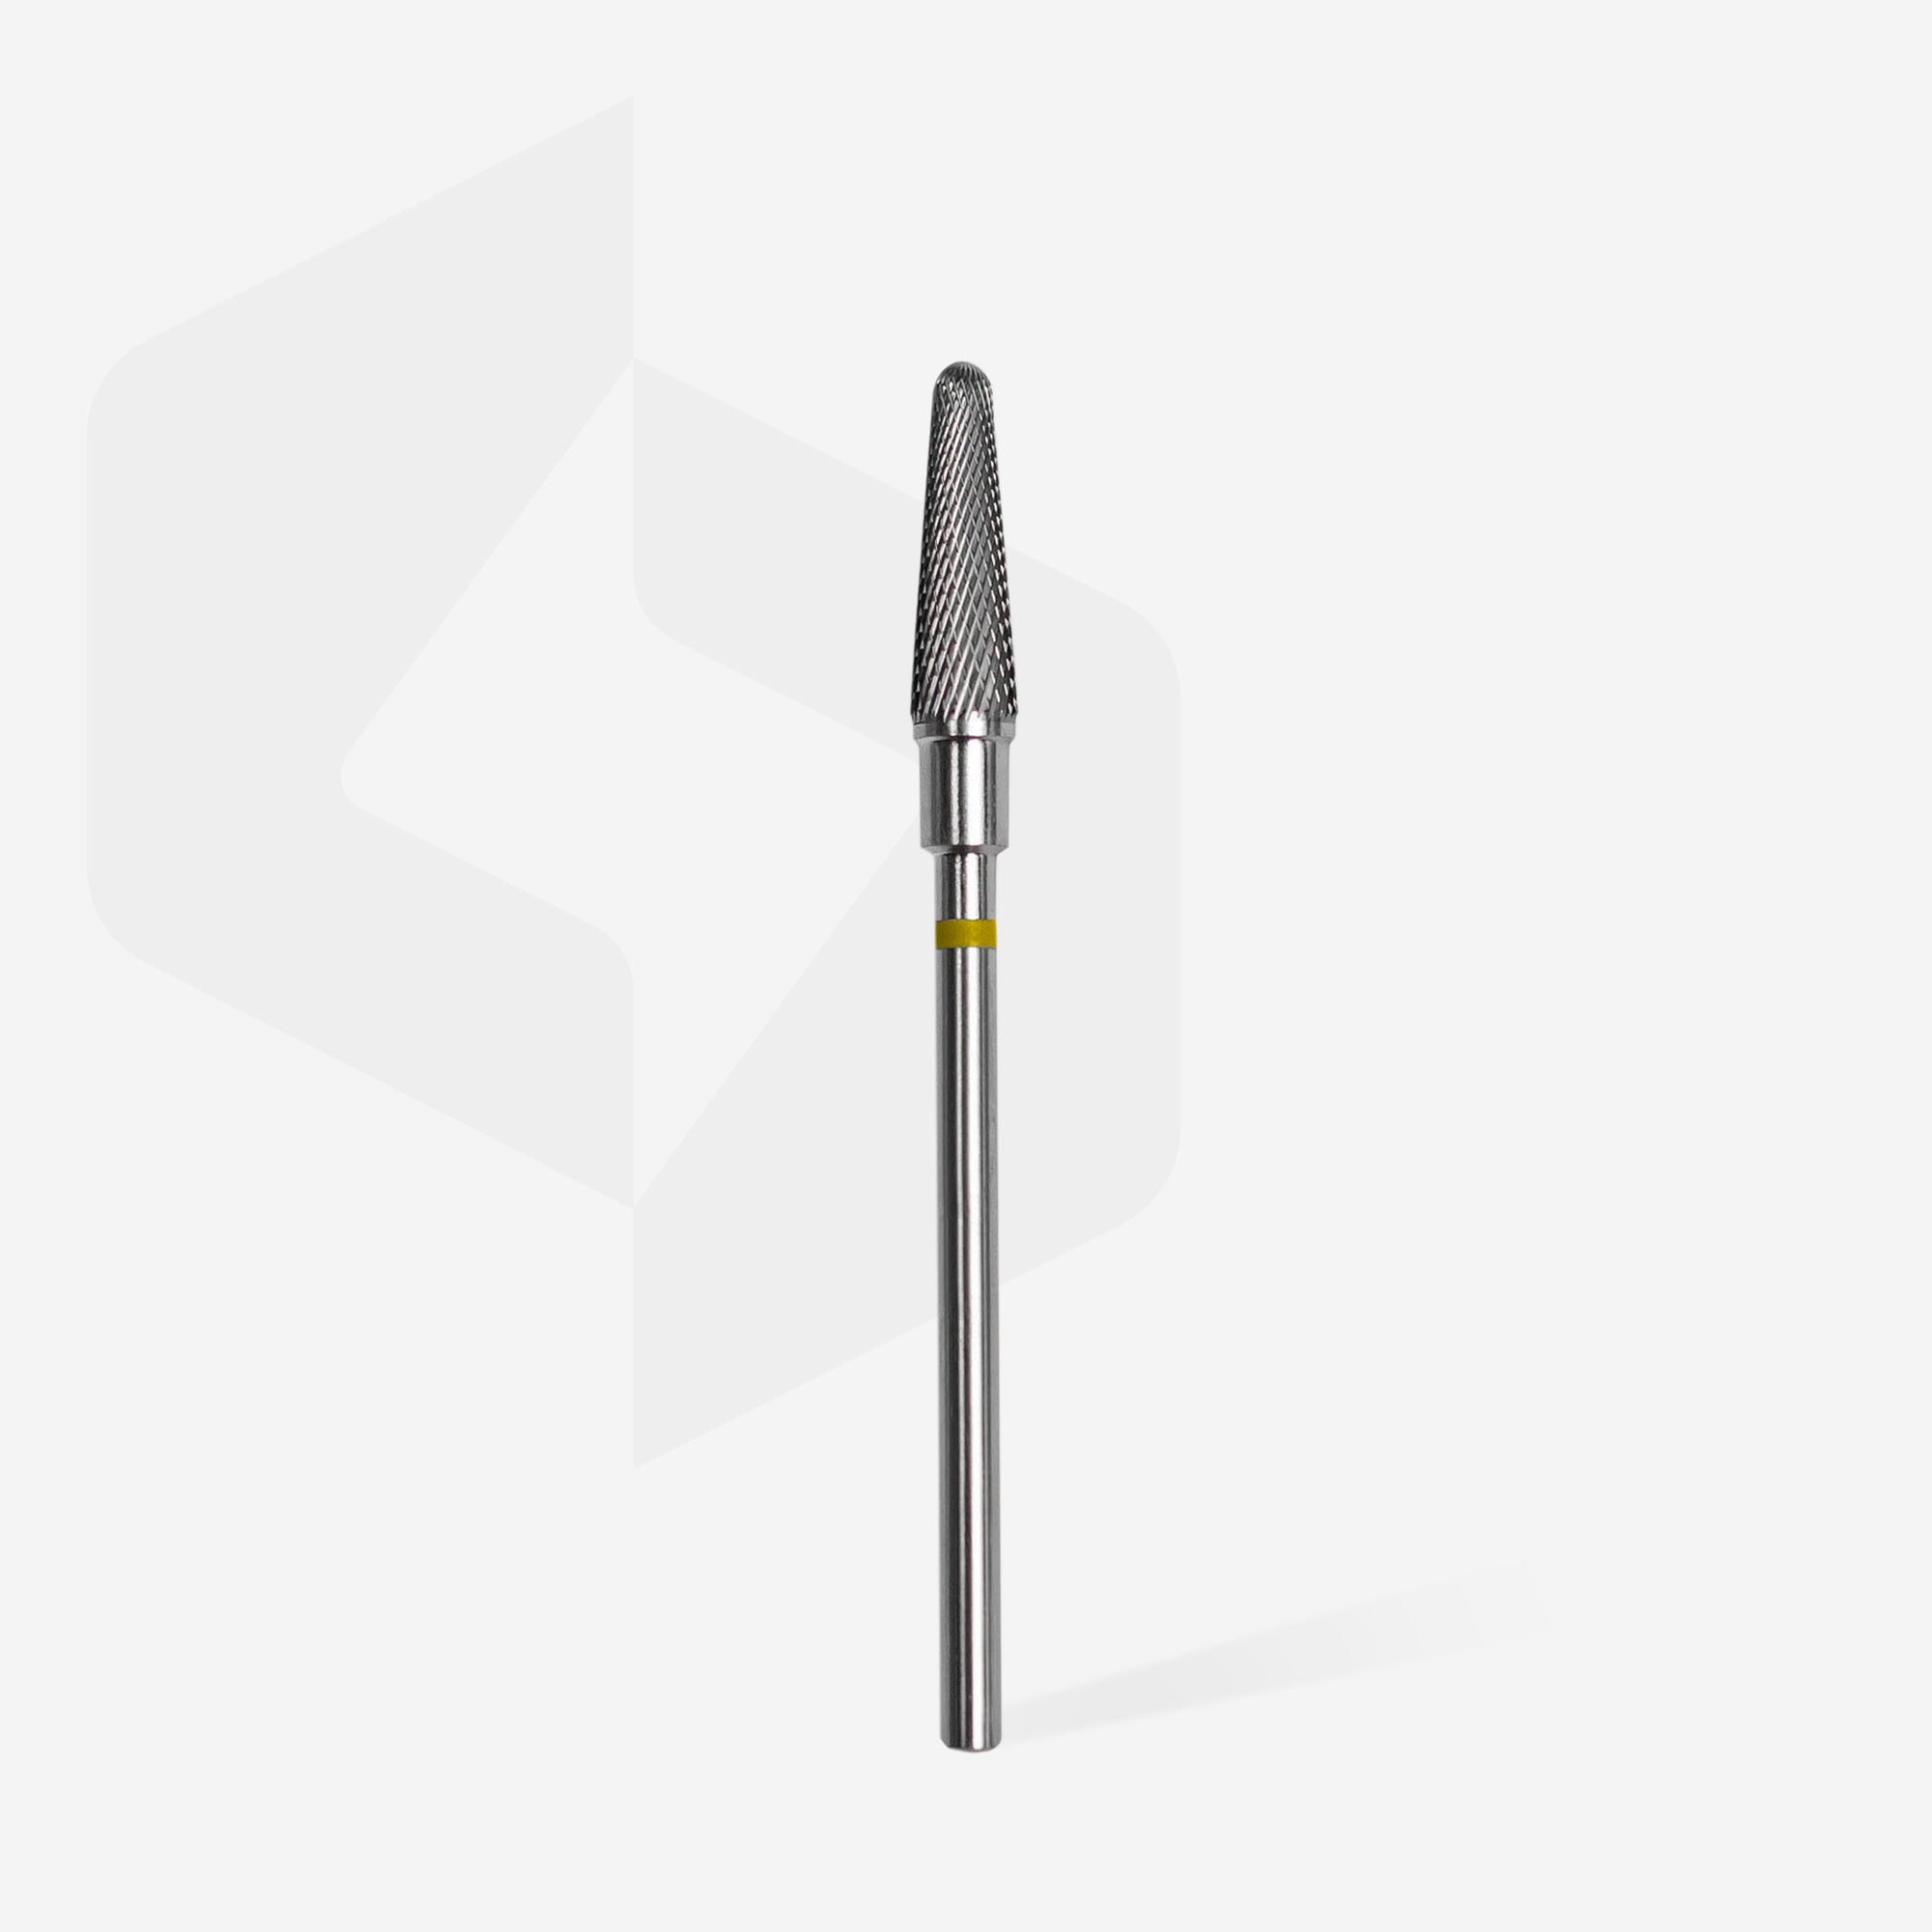 Carbide nail drill bit, "frustum", yellow, head diameter 4 mm / working part 13 mm